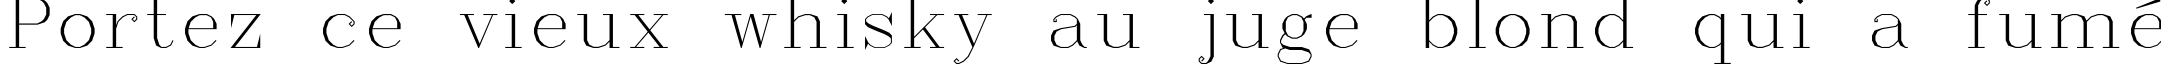 Пример написания шрифтом Complex текста на французском